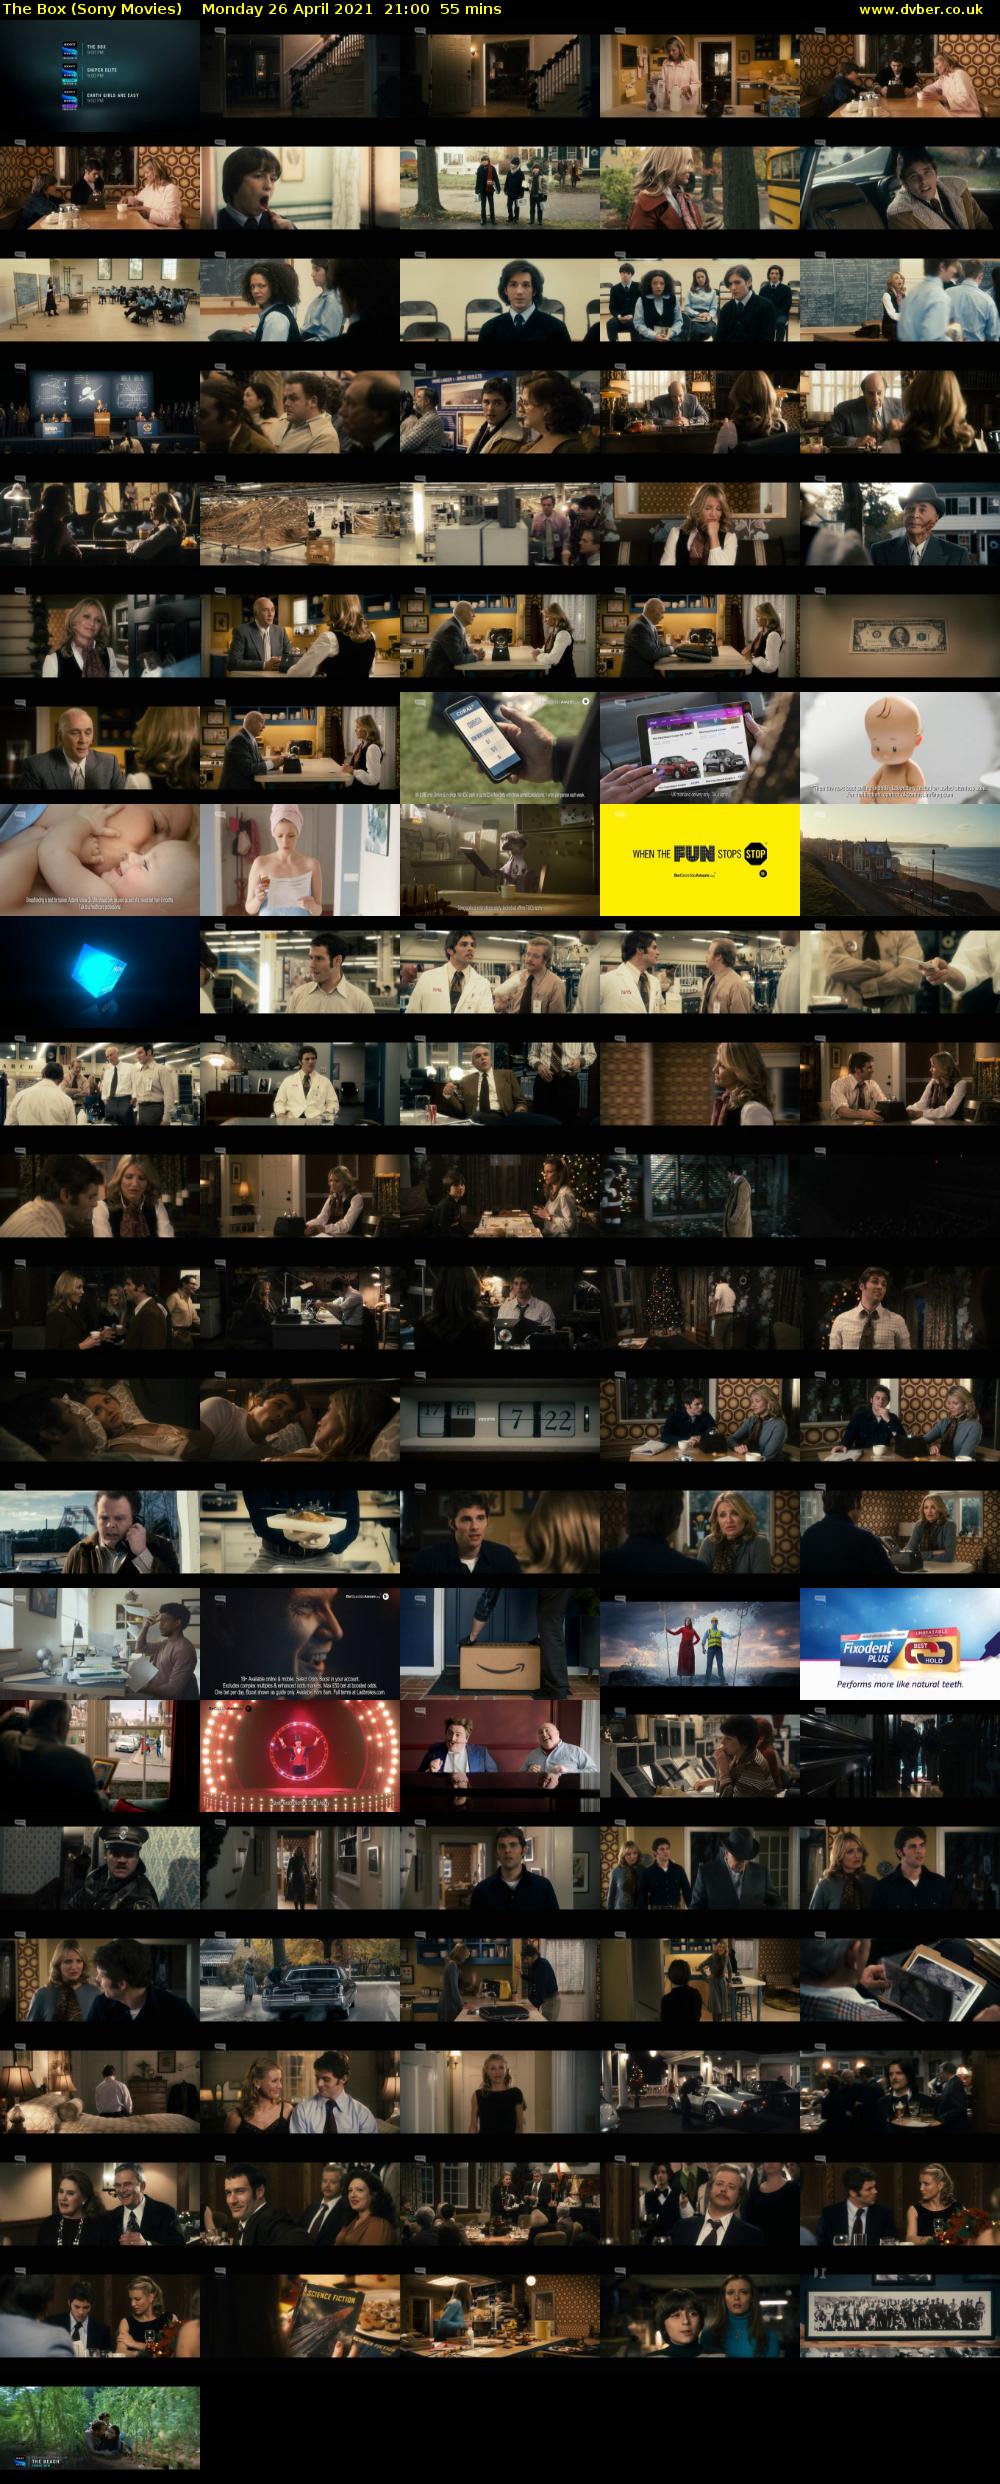 The Box (Sony Movies) Monday 26 April 2021 21:00 - 21:55